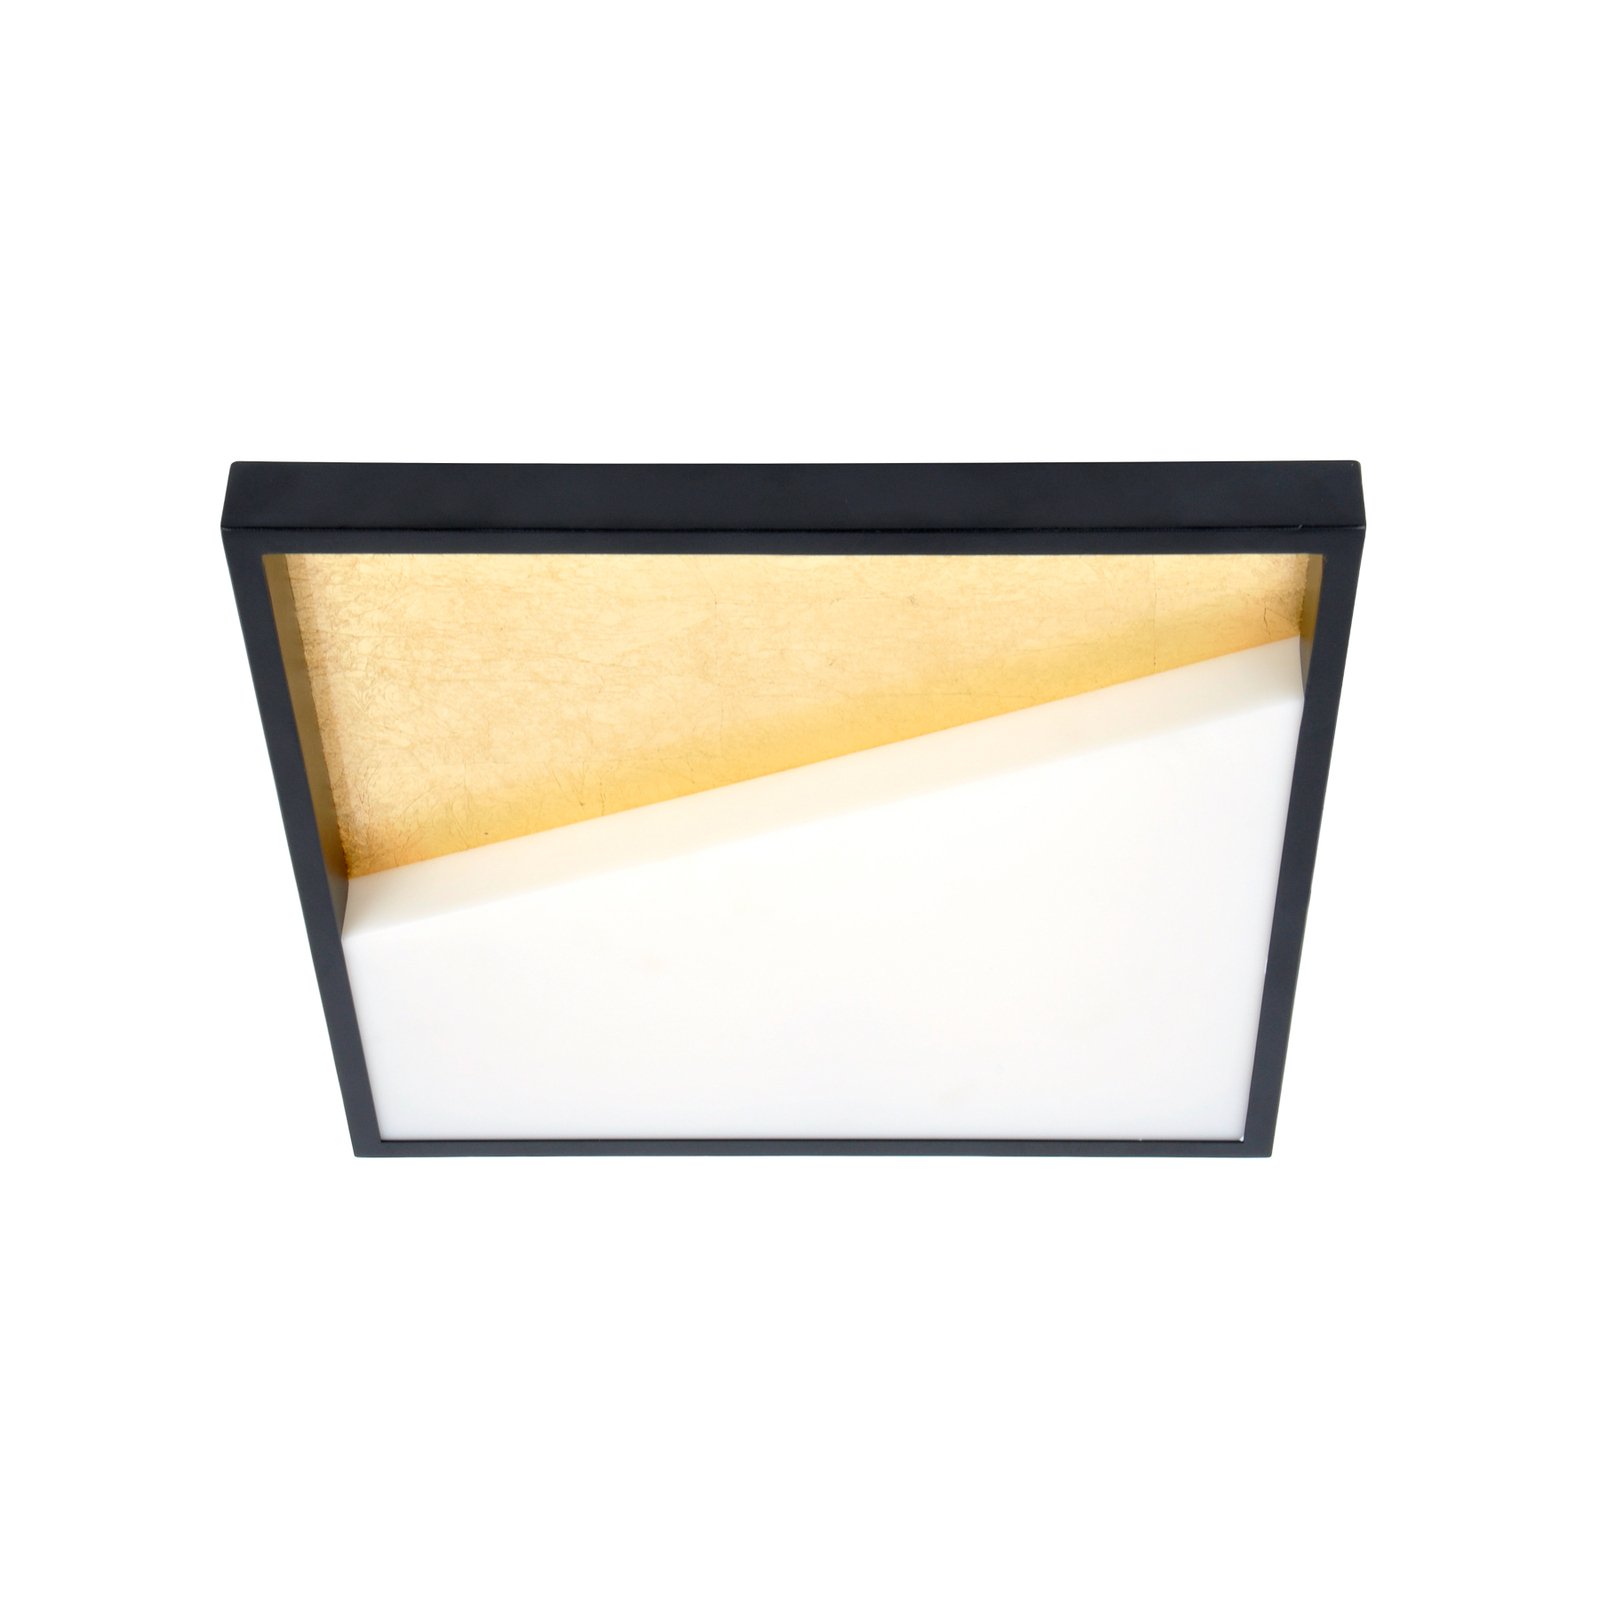 LED wall light Vista, gold/black, 40 x 40 cm